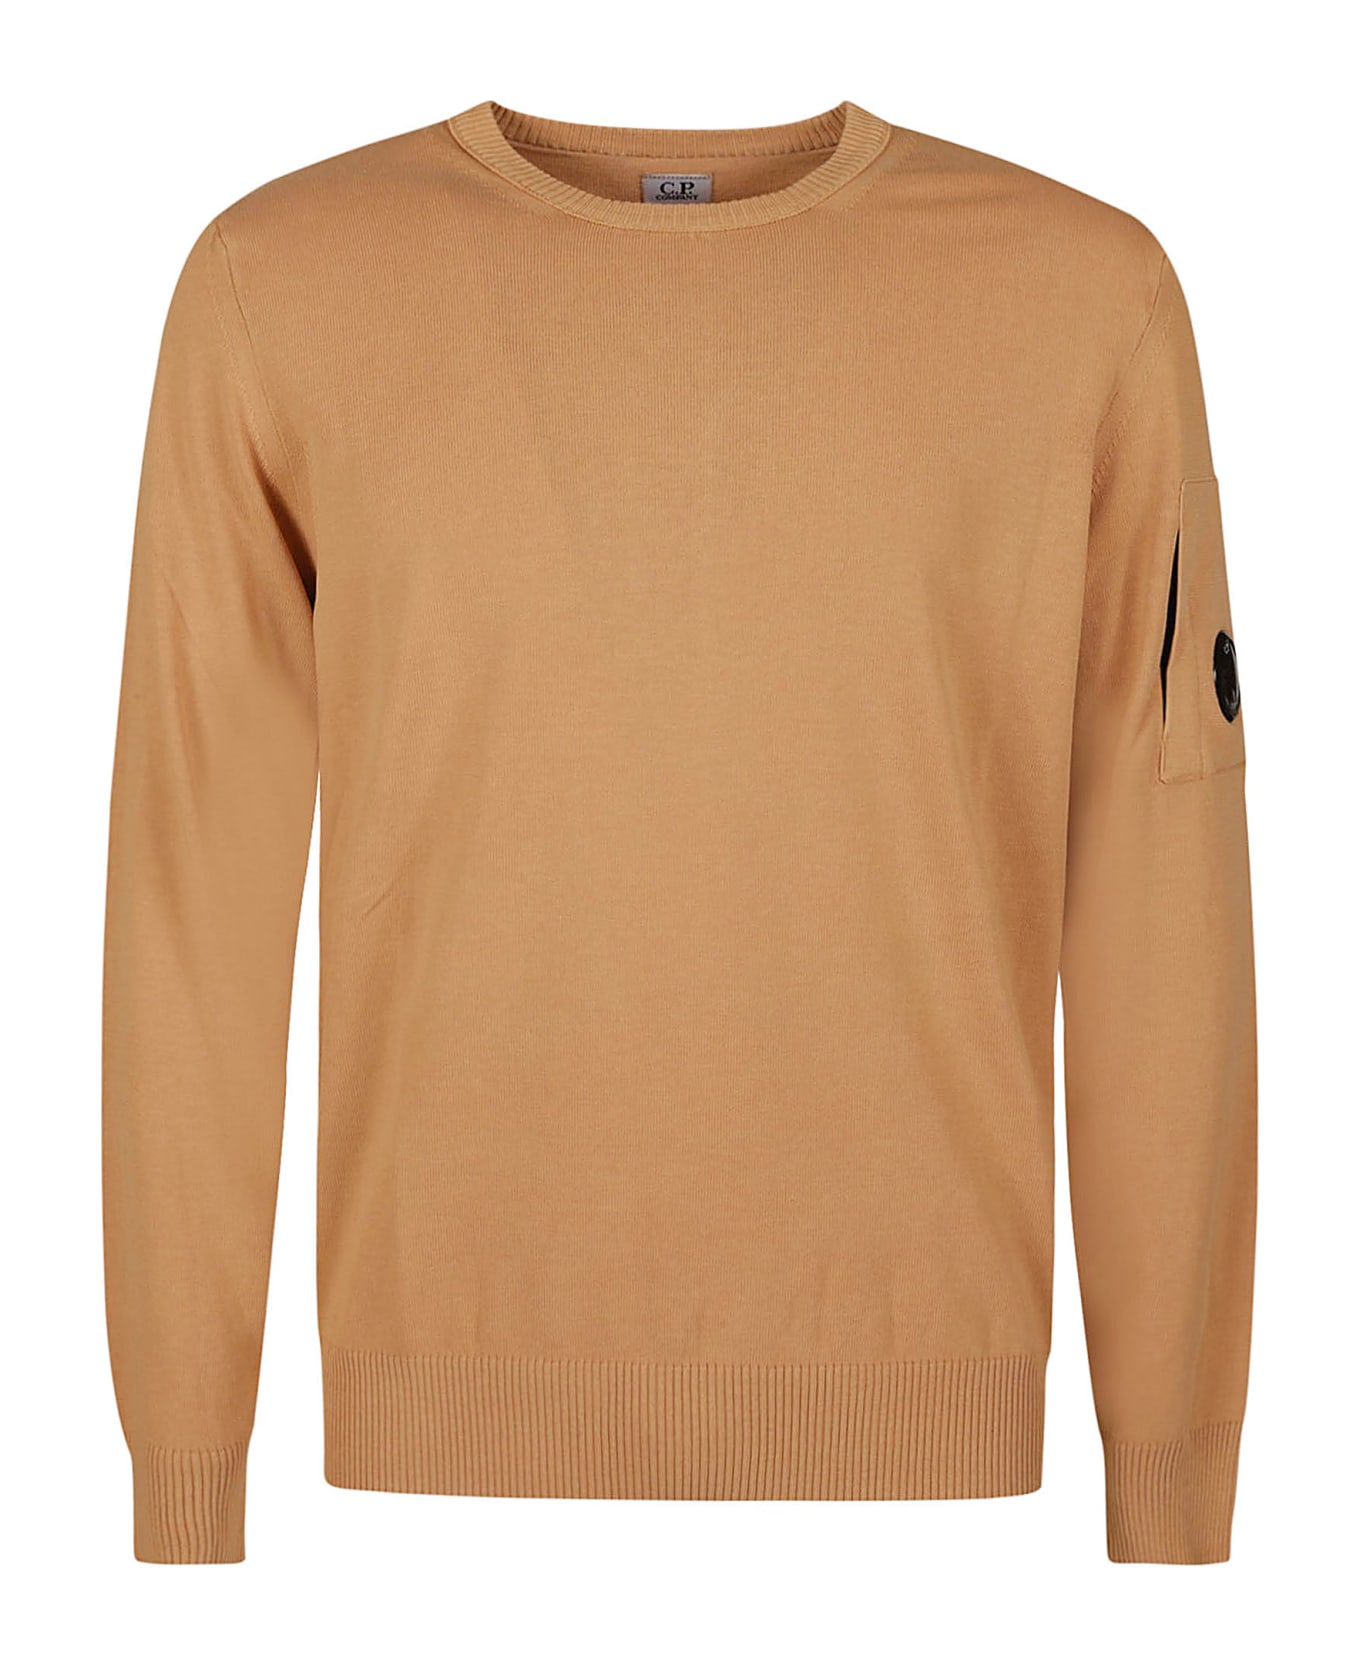 C.P. Company Old Dyed Crepe Sweatshirt - Brown